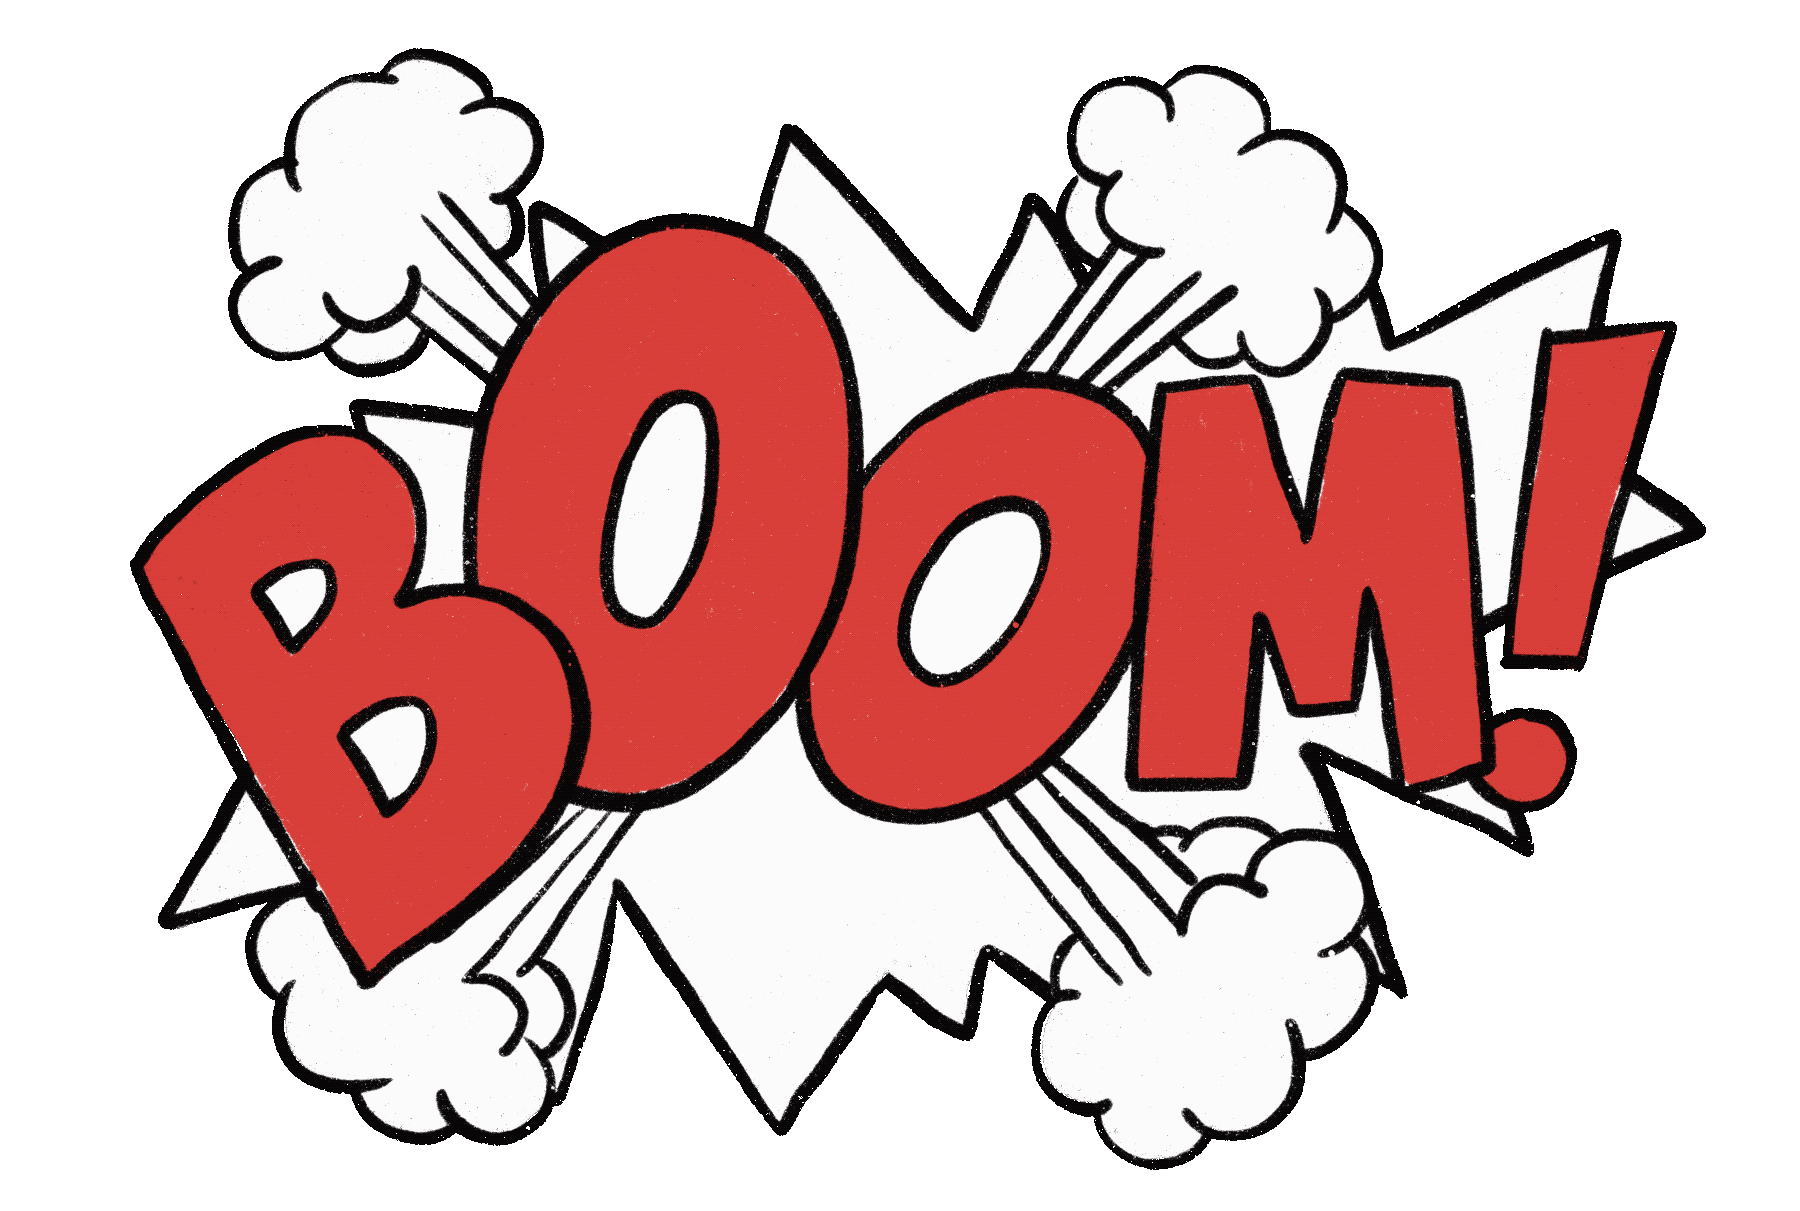 boom boom animation